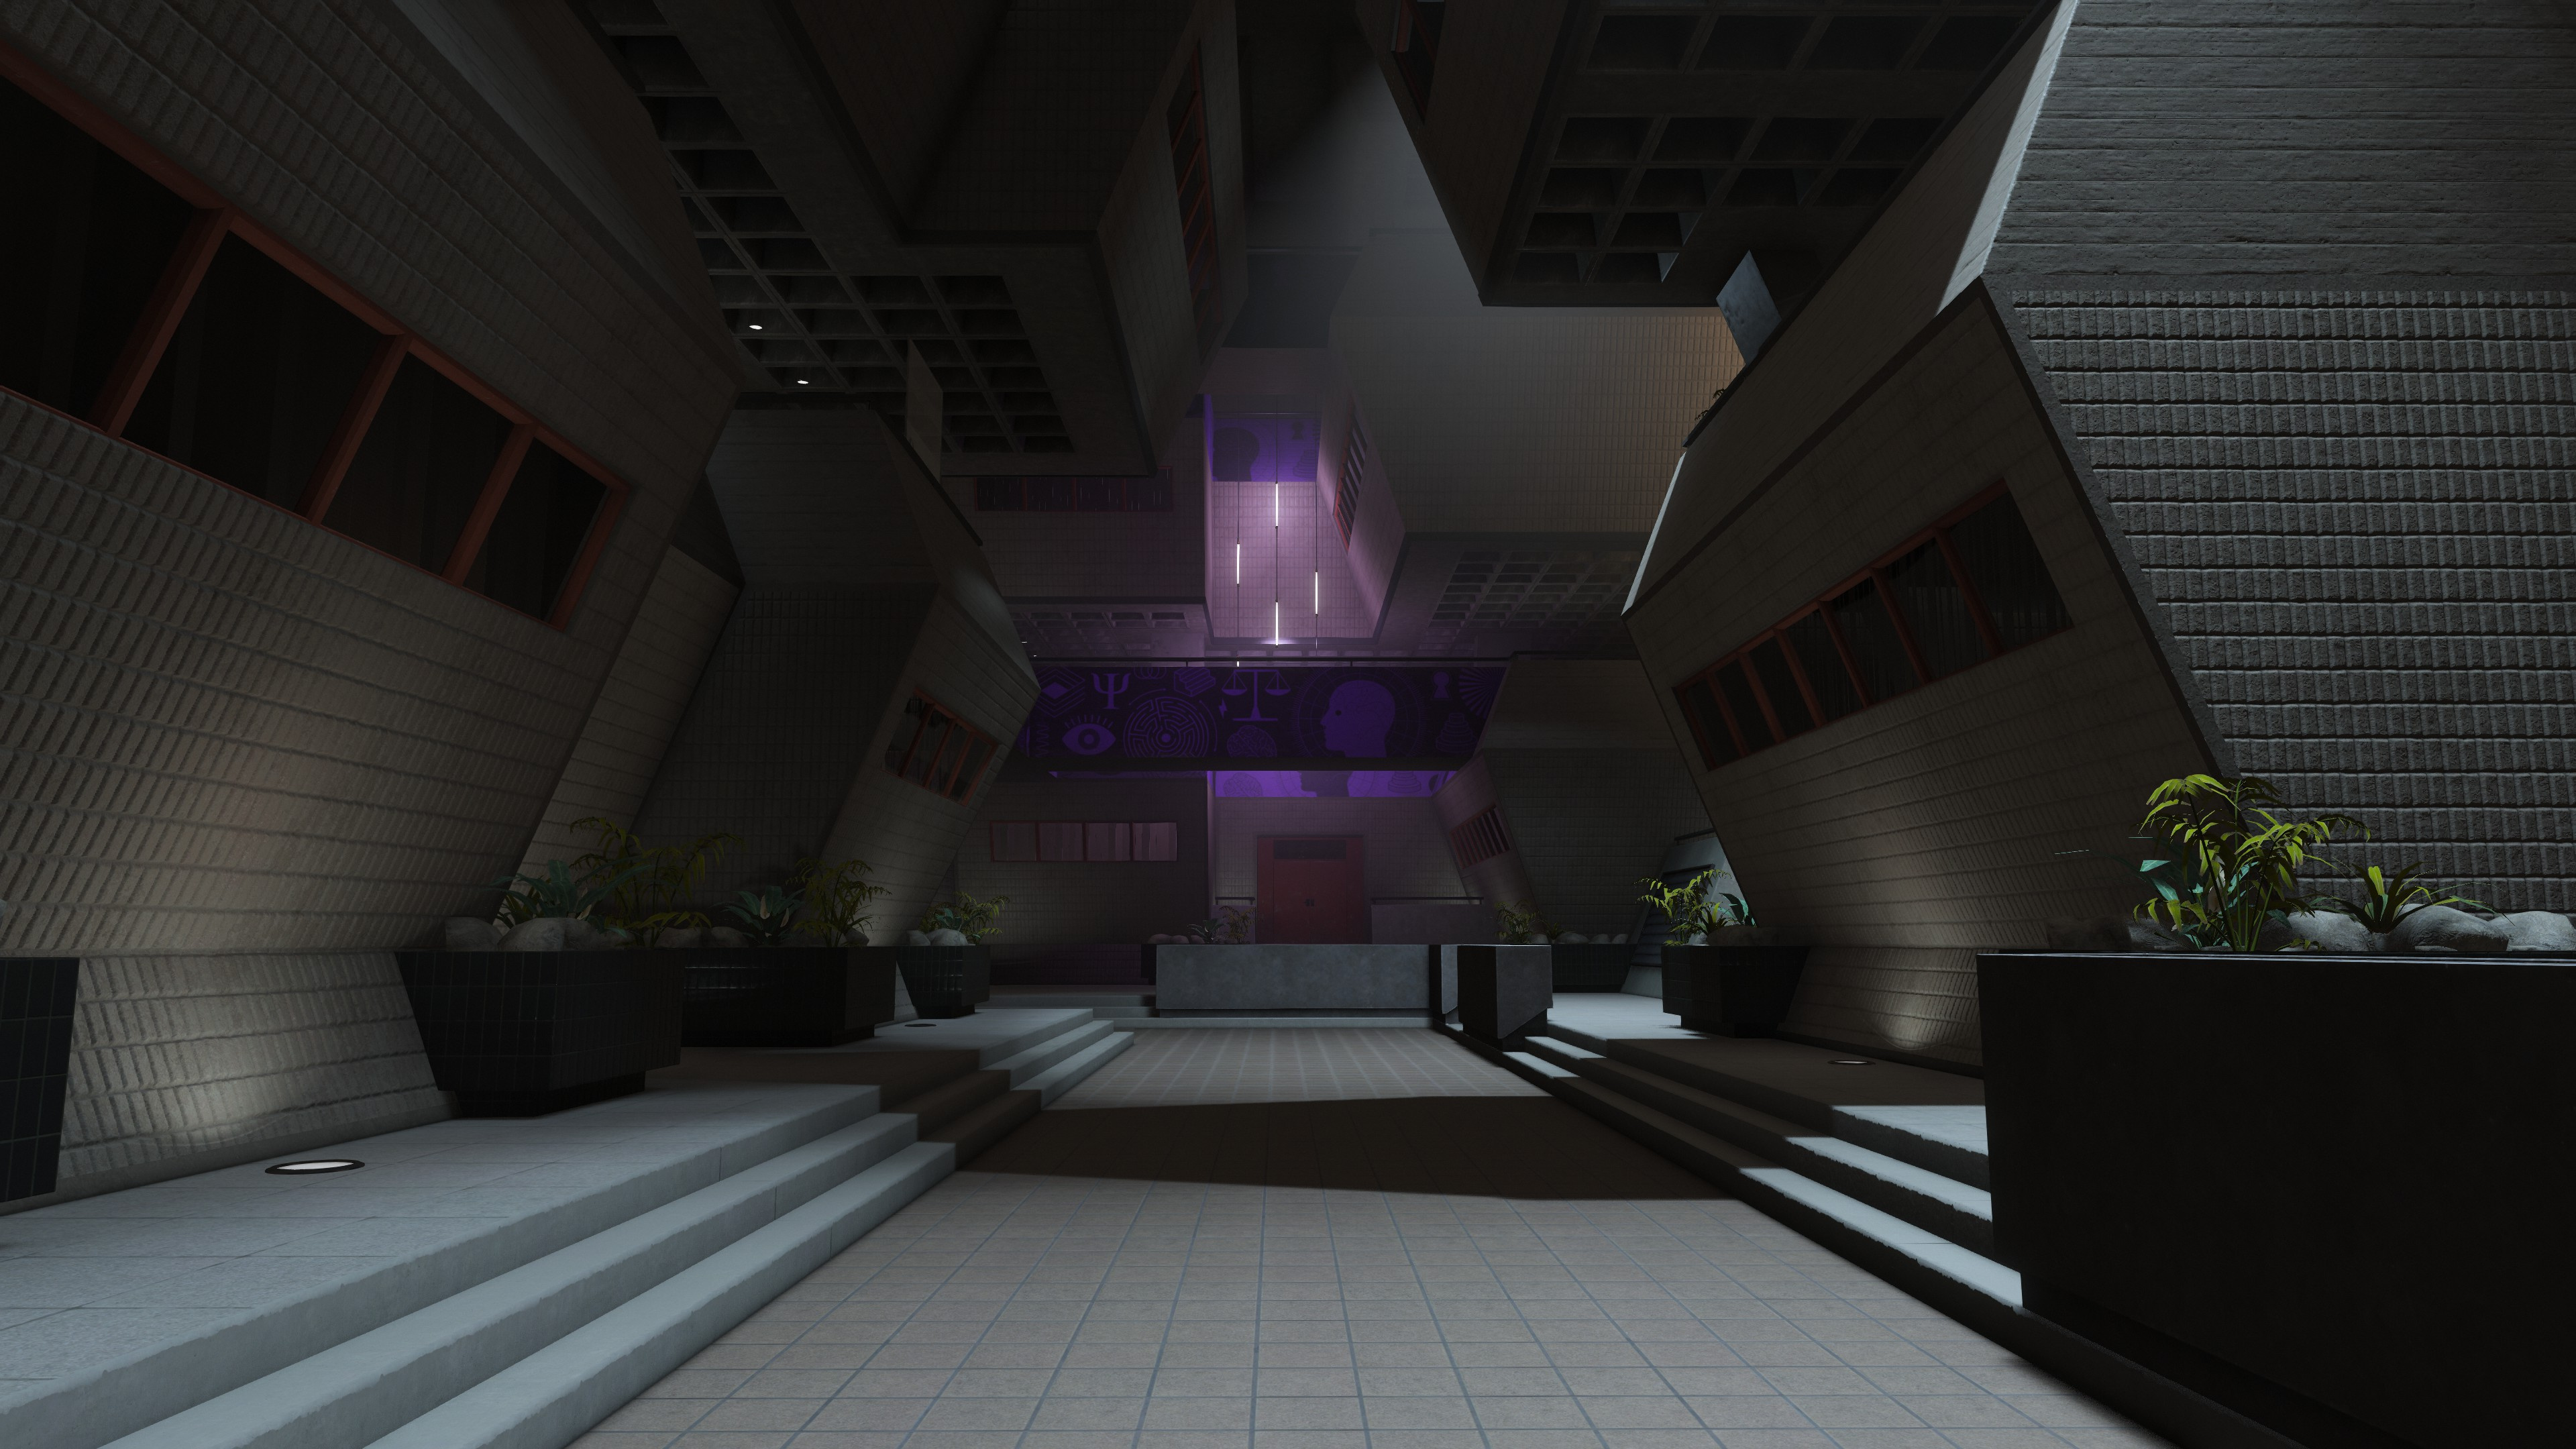 GTA III] Extended Interiors Universe - Mod by M. Osborn 